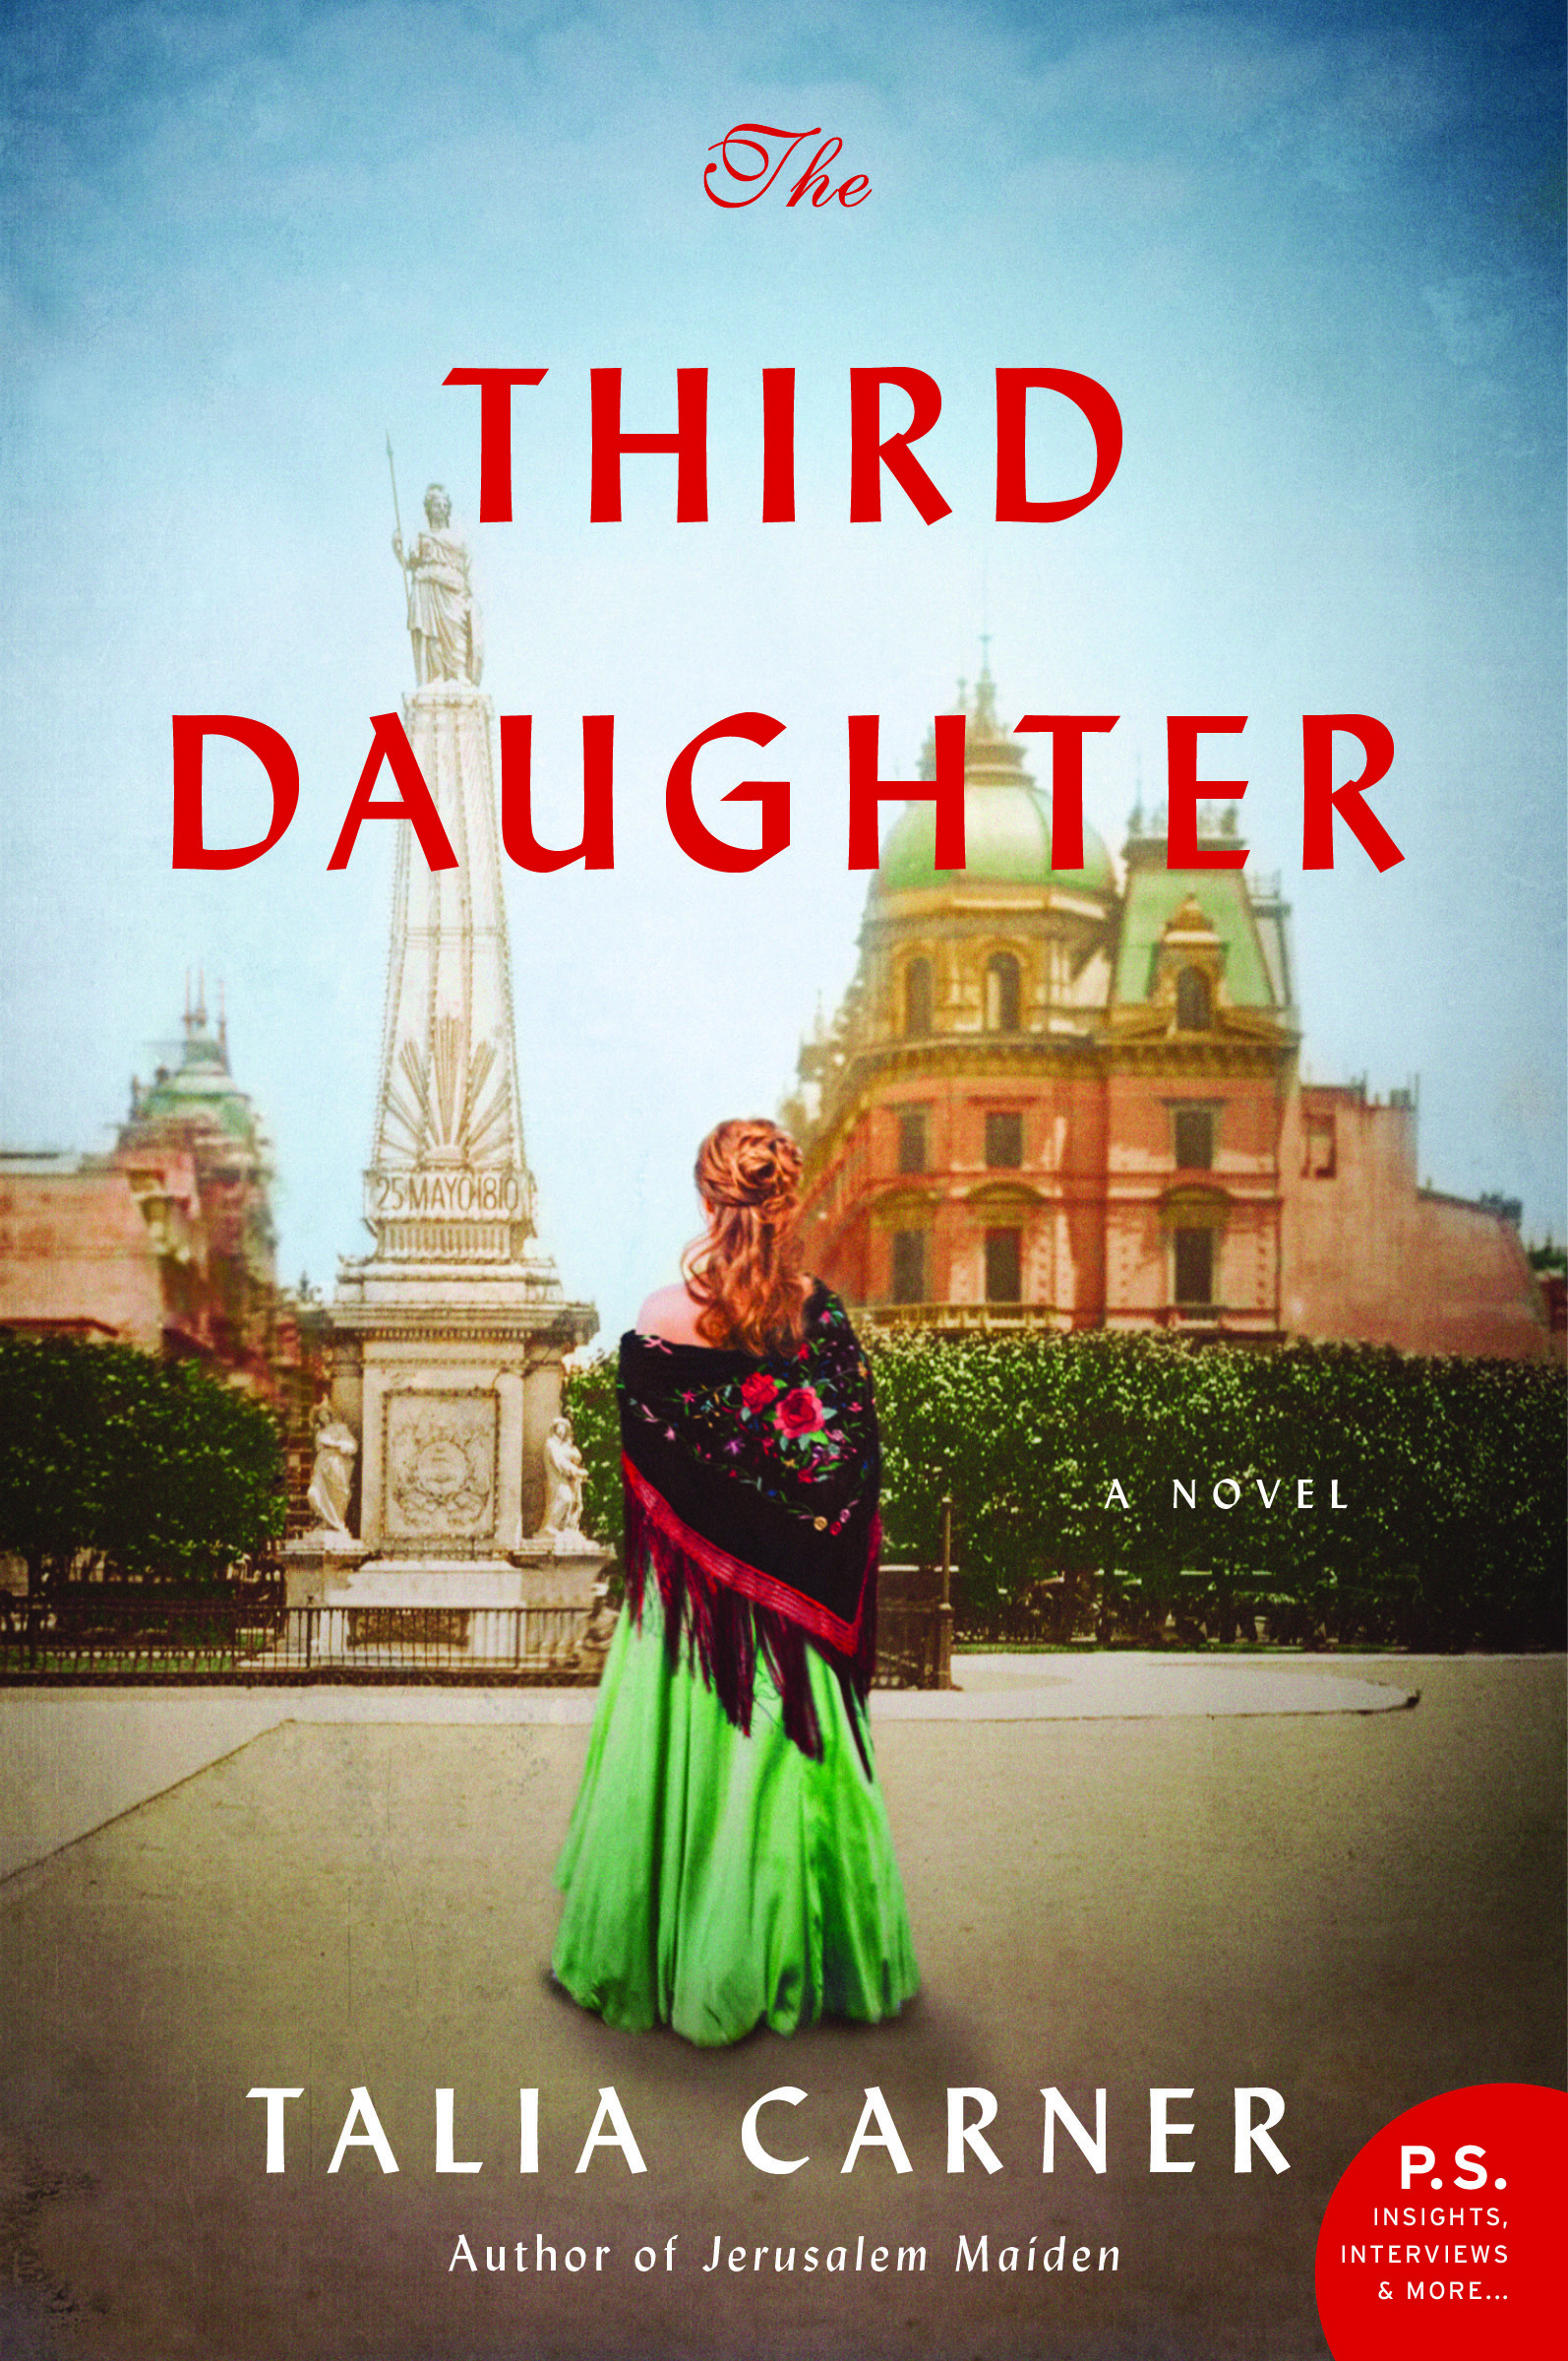 The cover of Talia Carner's novel 